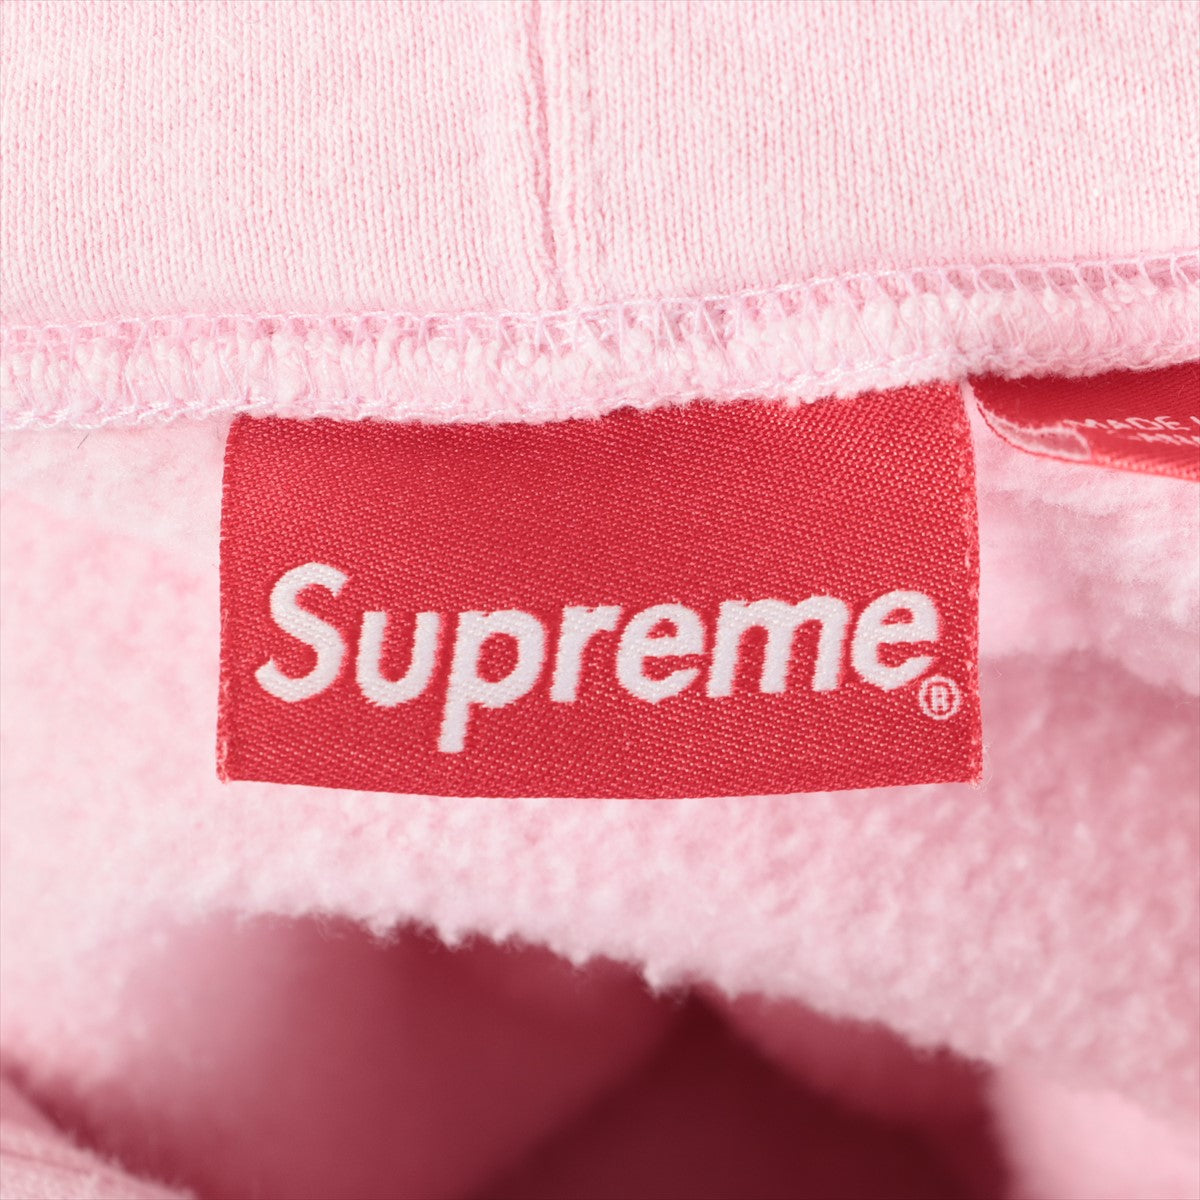 Supreme 22SS Cotton & Polyester Parker M Men's Pink  Bling Box Logo Hooded Sweatshirt